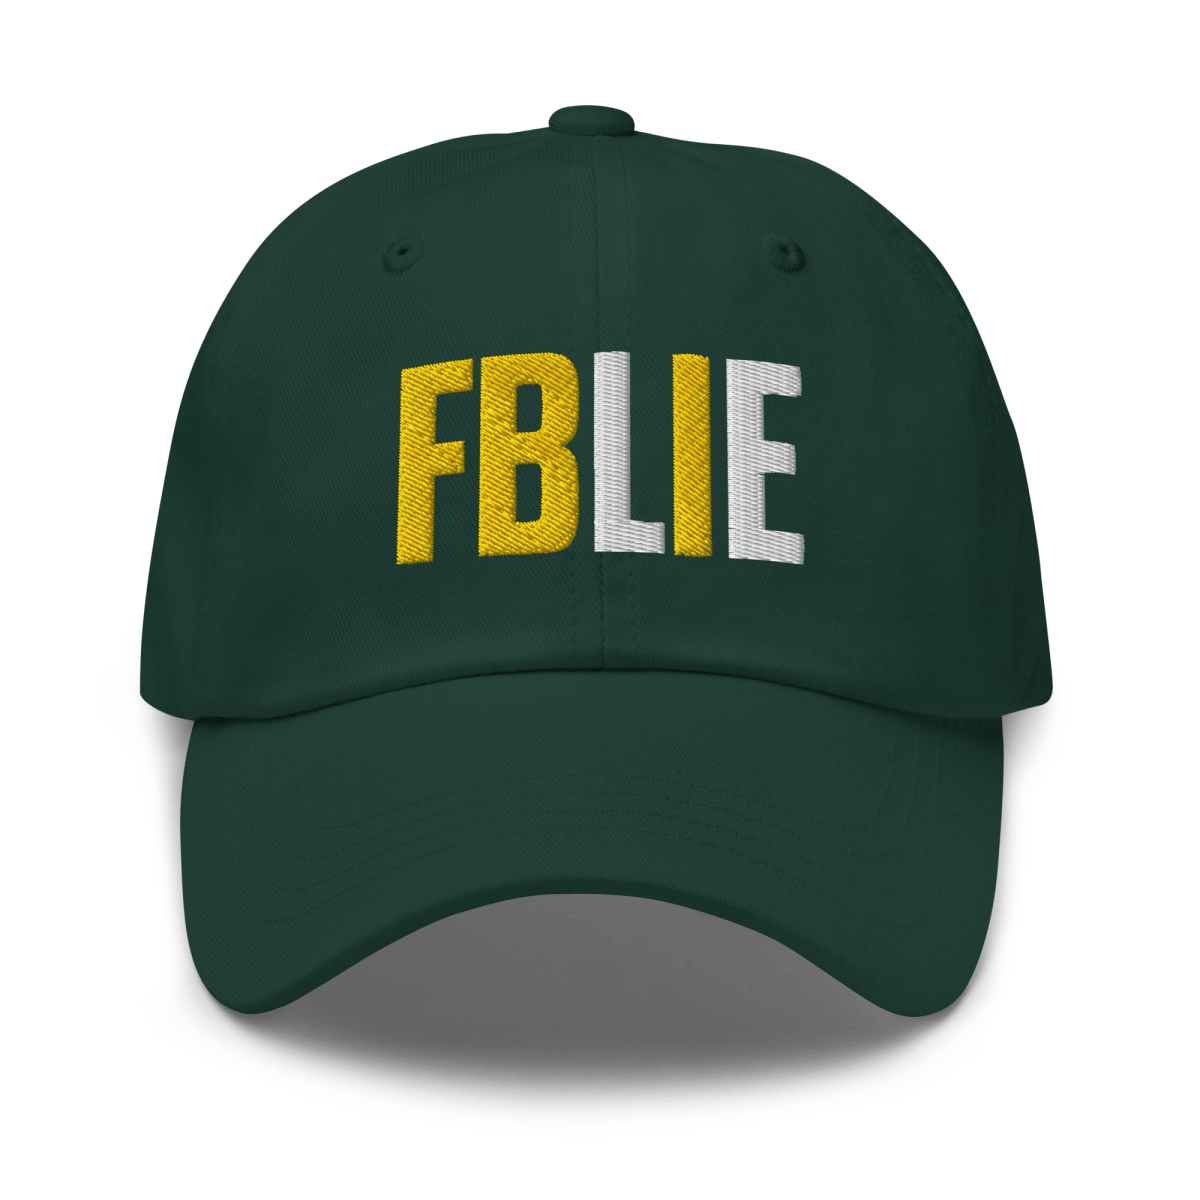 Green FBI / FBLIE Hat